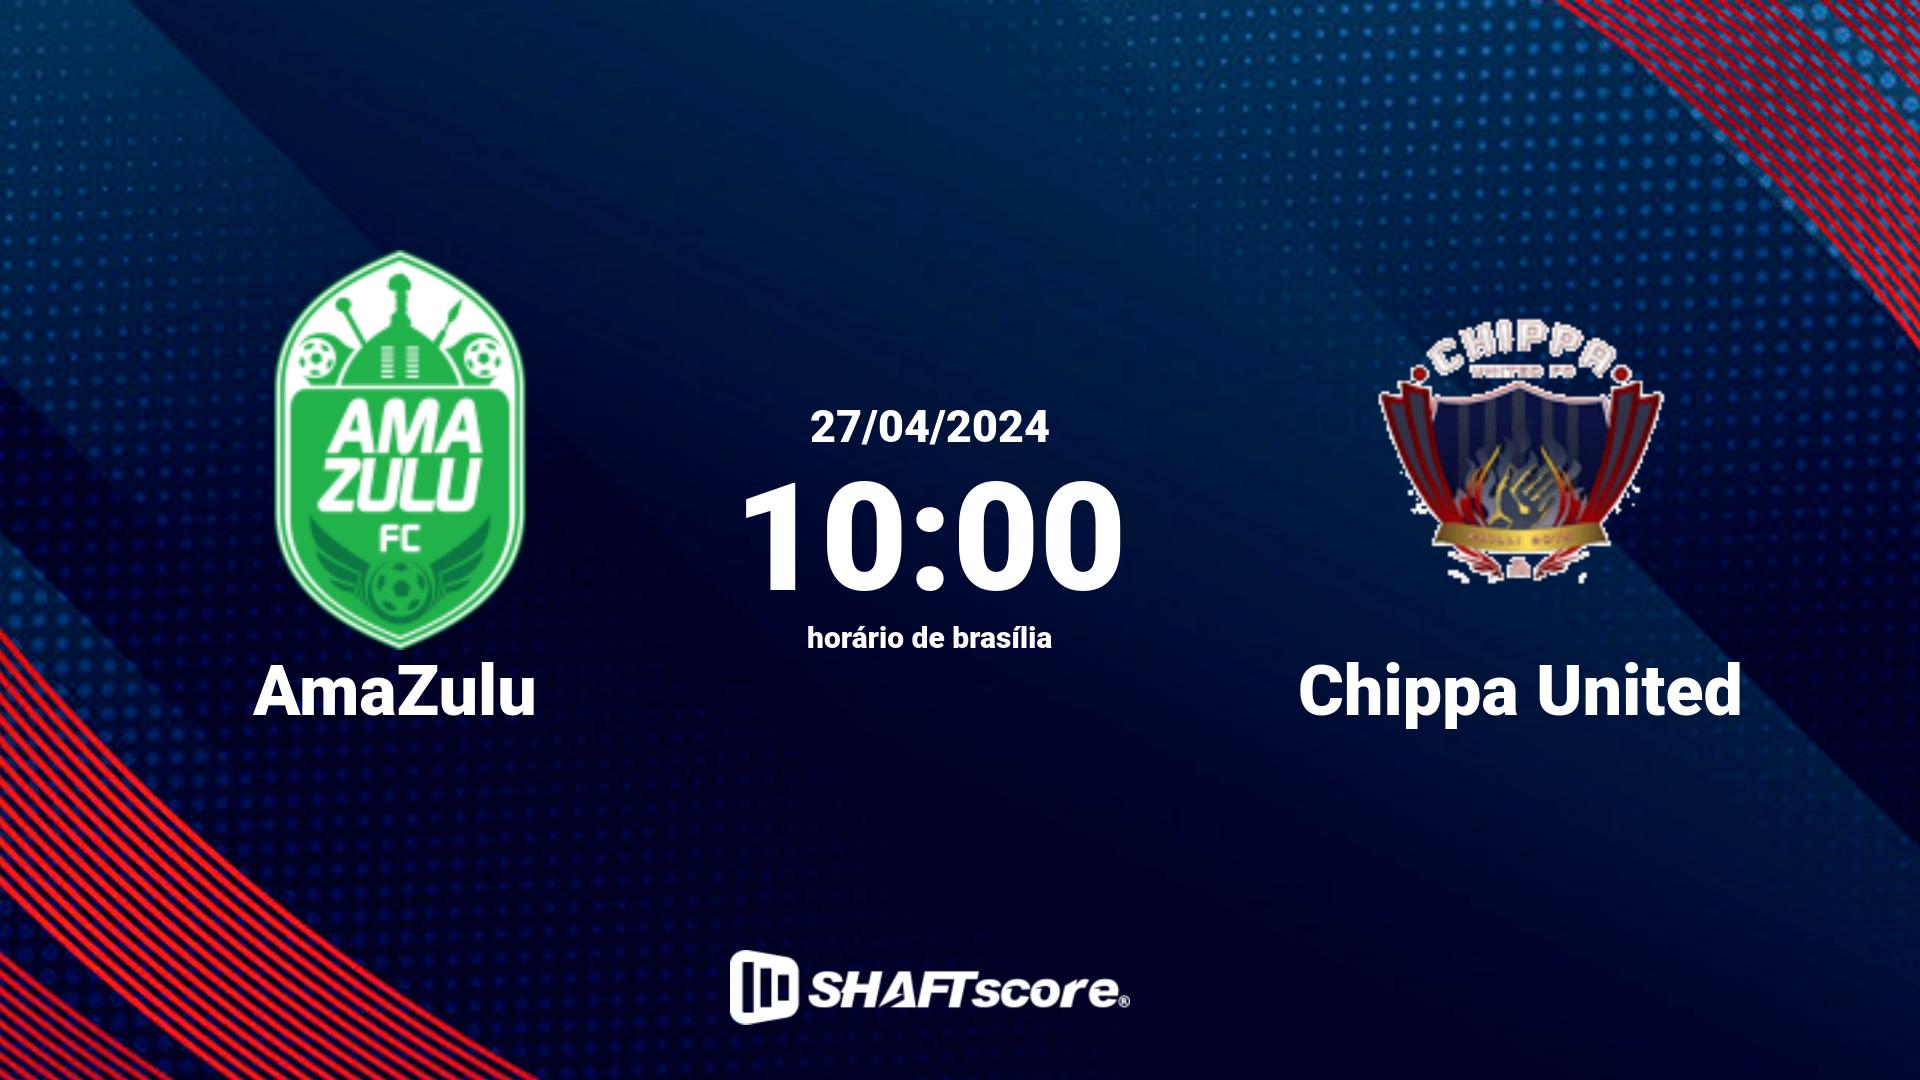 Estatísticas do jogo AmaZulu vs Chippa United 27.04 10:00